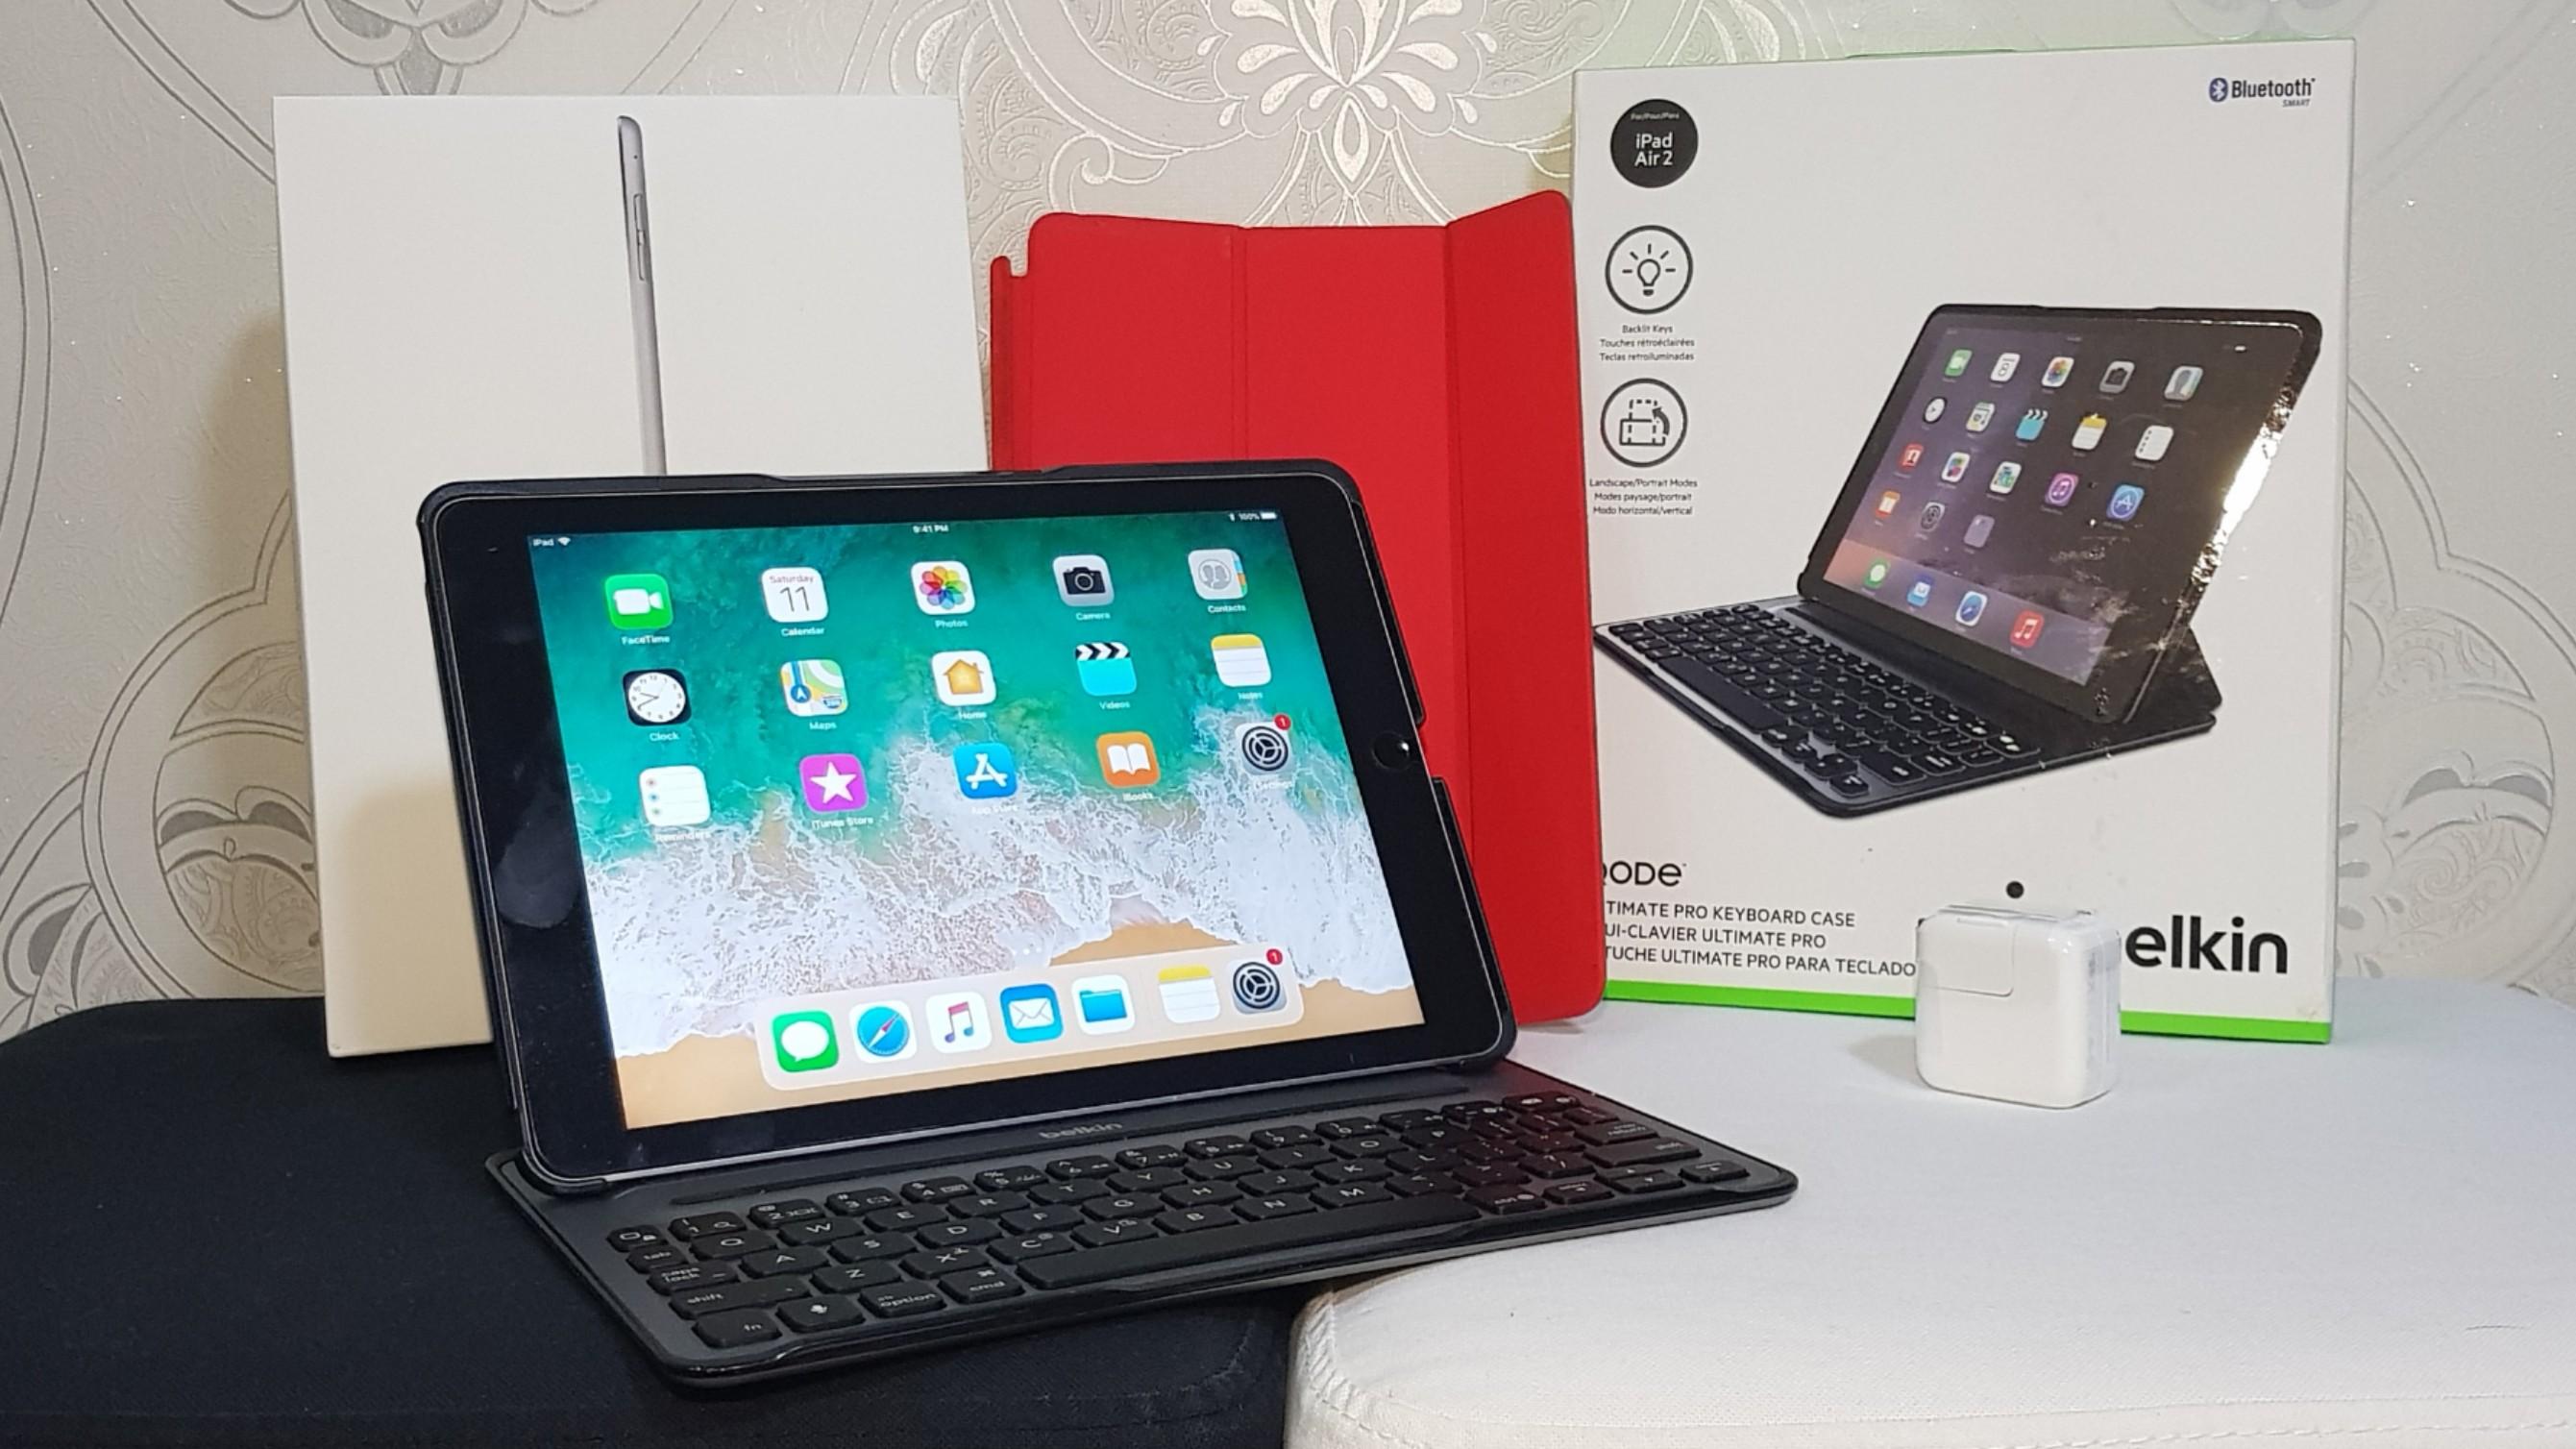 Ipad Air 2 64gb Wifi Belkin Qode Keyboard Mobile Phones Tablets Tablets On Carousell